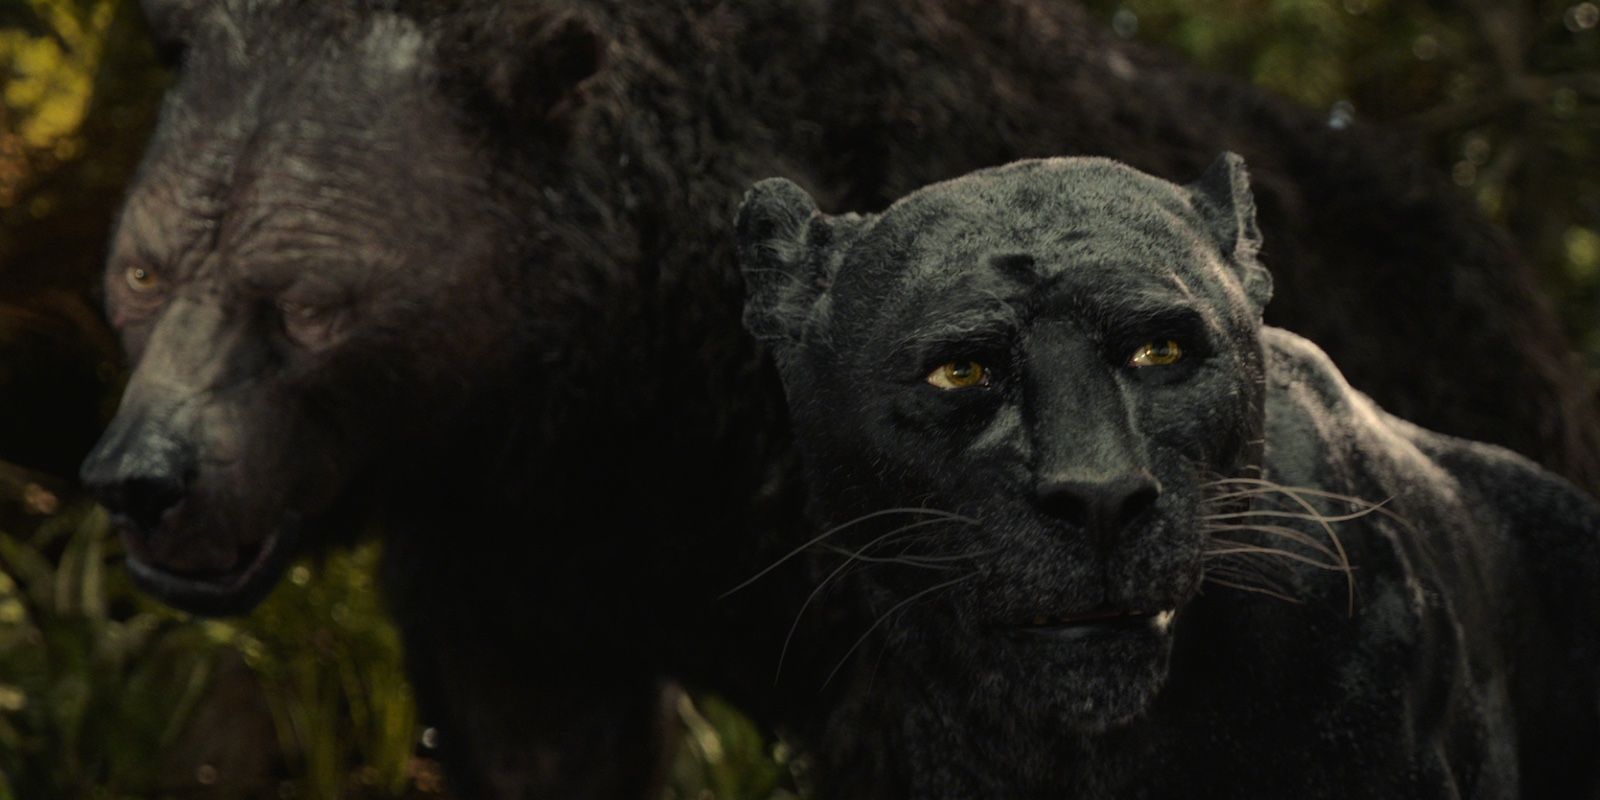 Mowgli: Legend of the Jungle Review: A Dark, Visually Stunning Adaptation